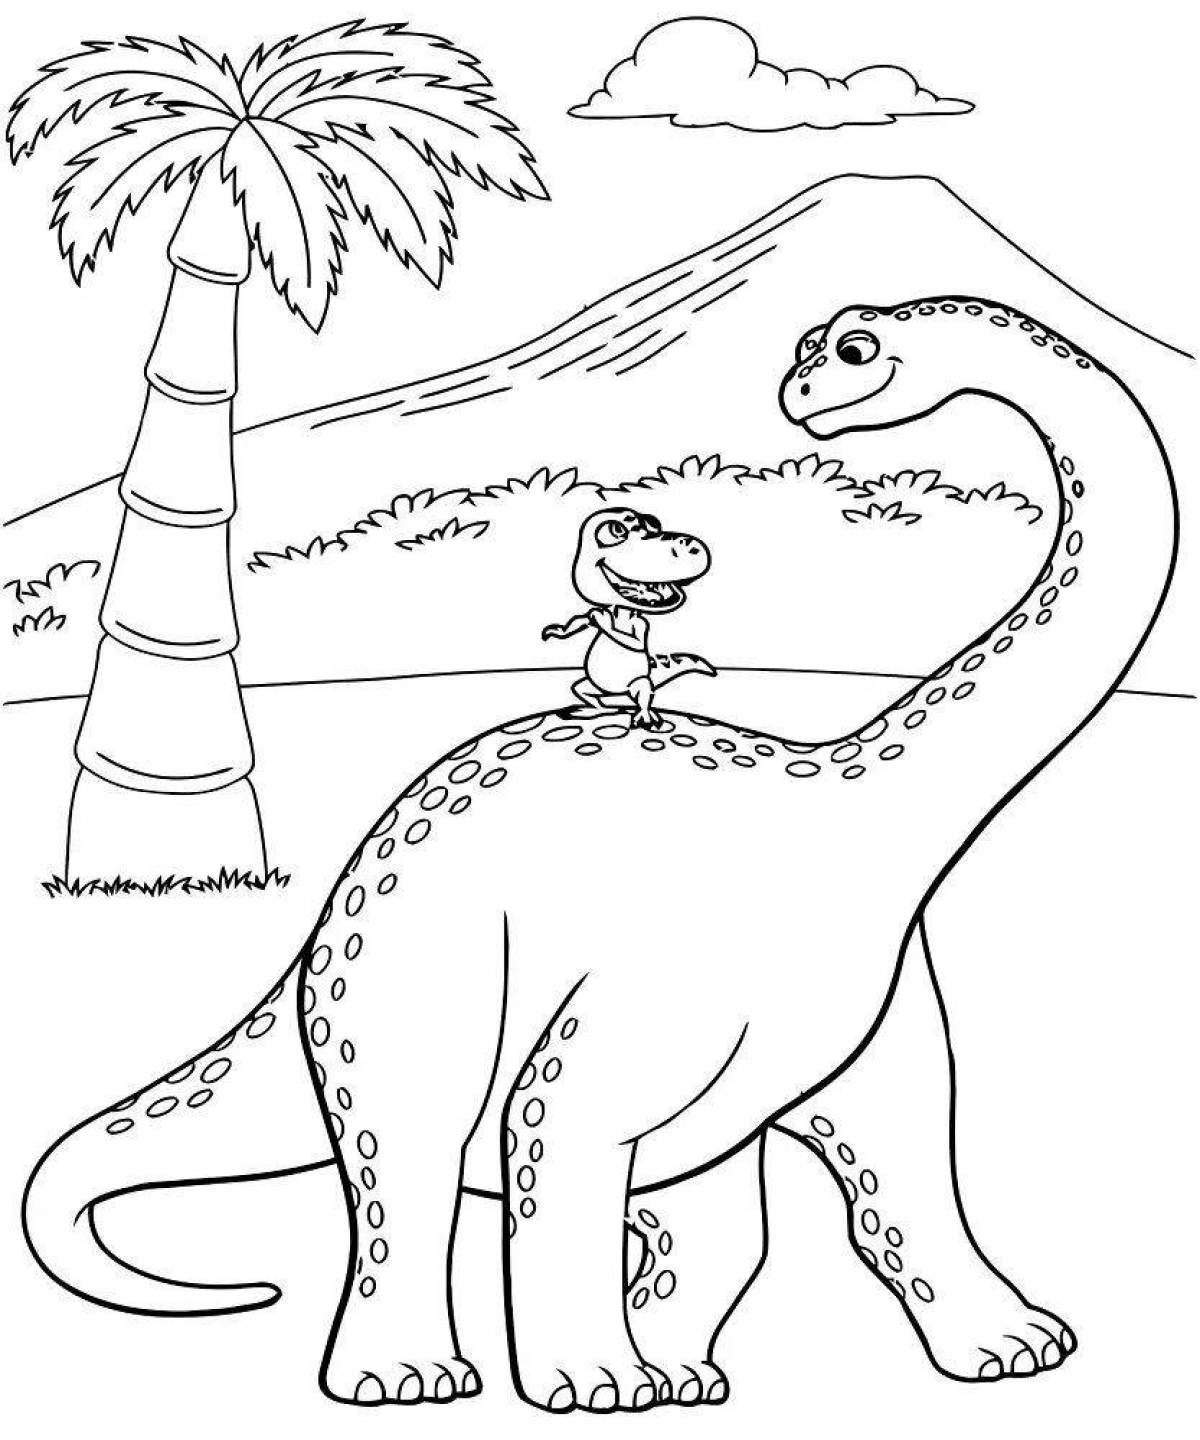 Brontosaurus dazzling coloring book